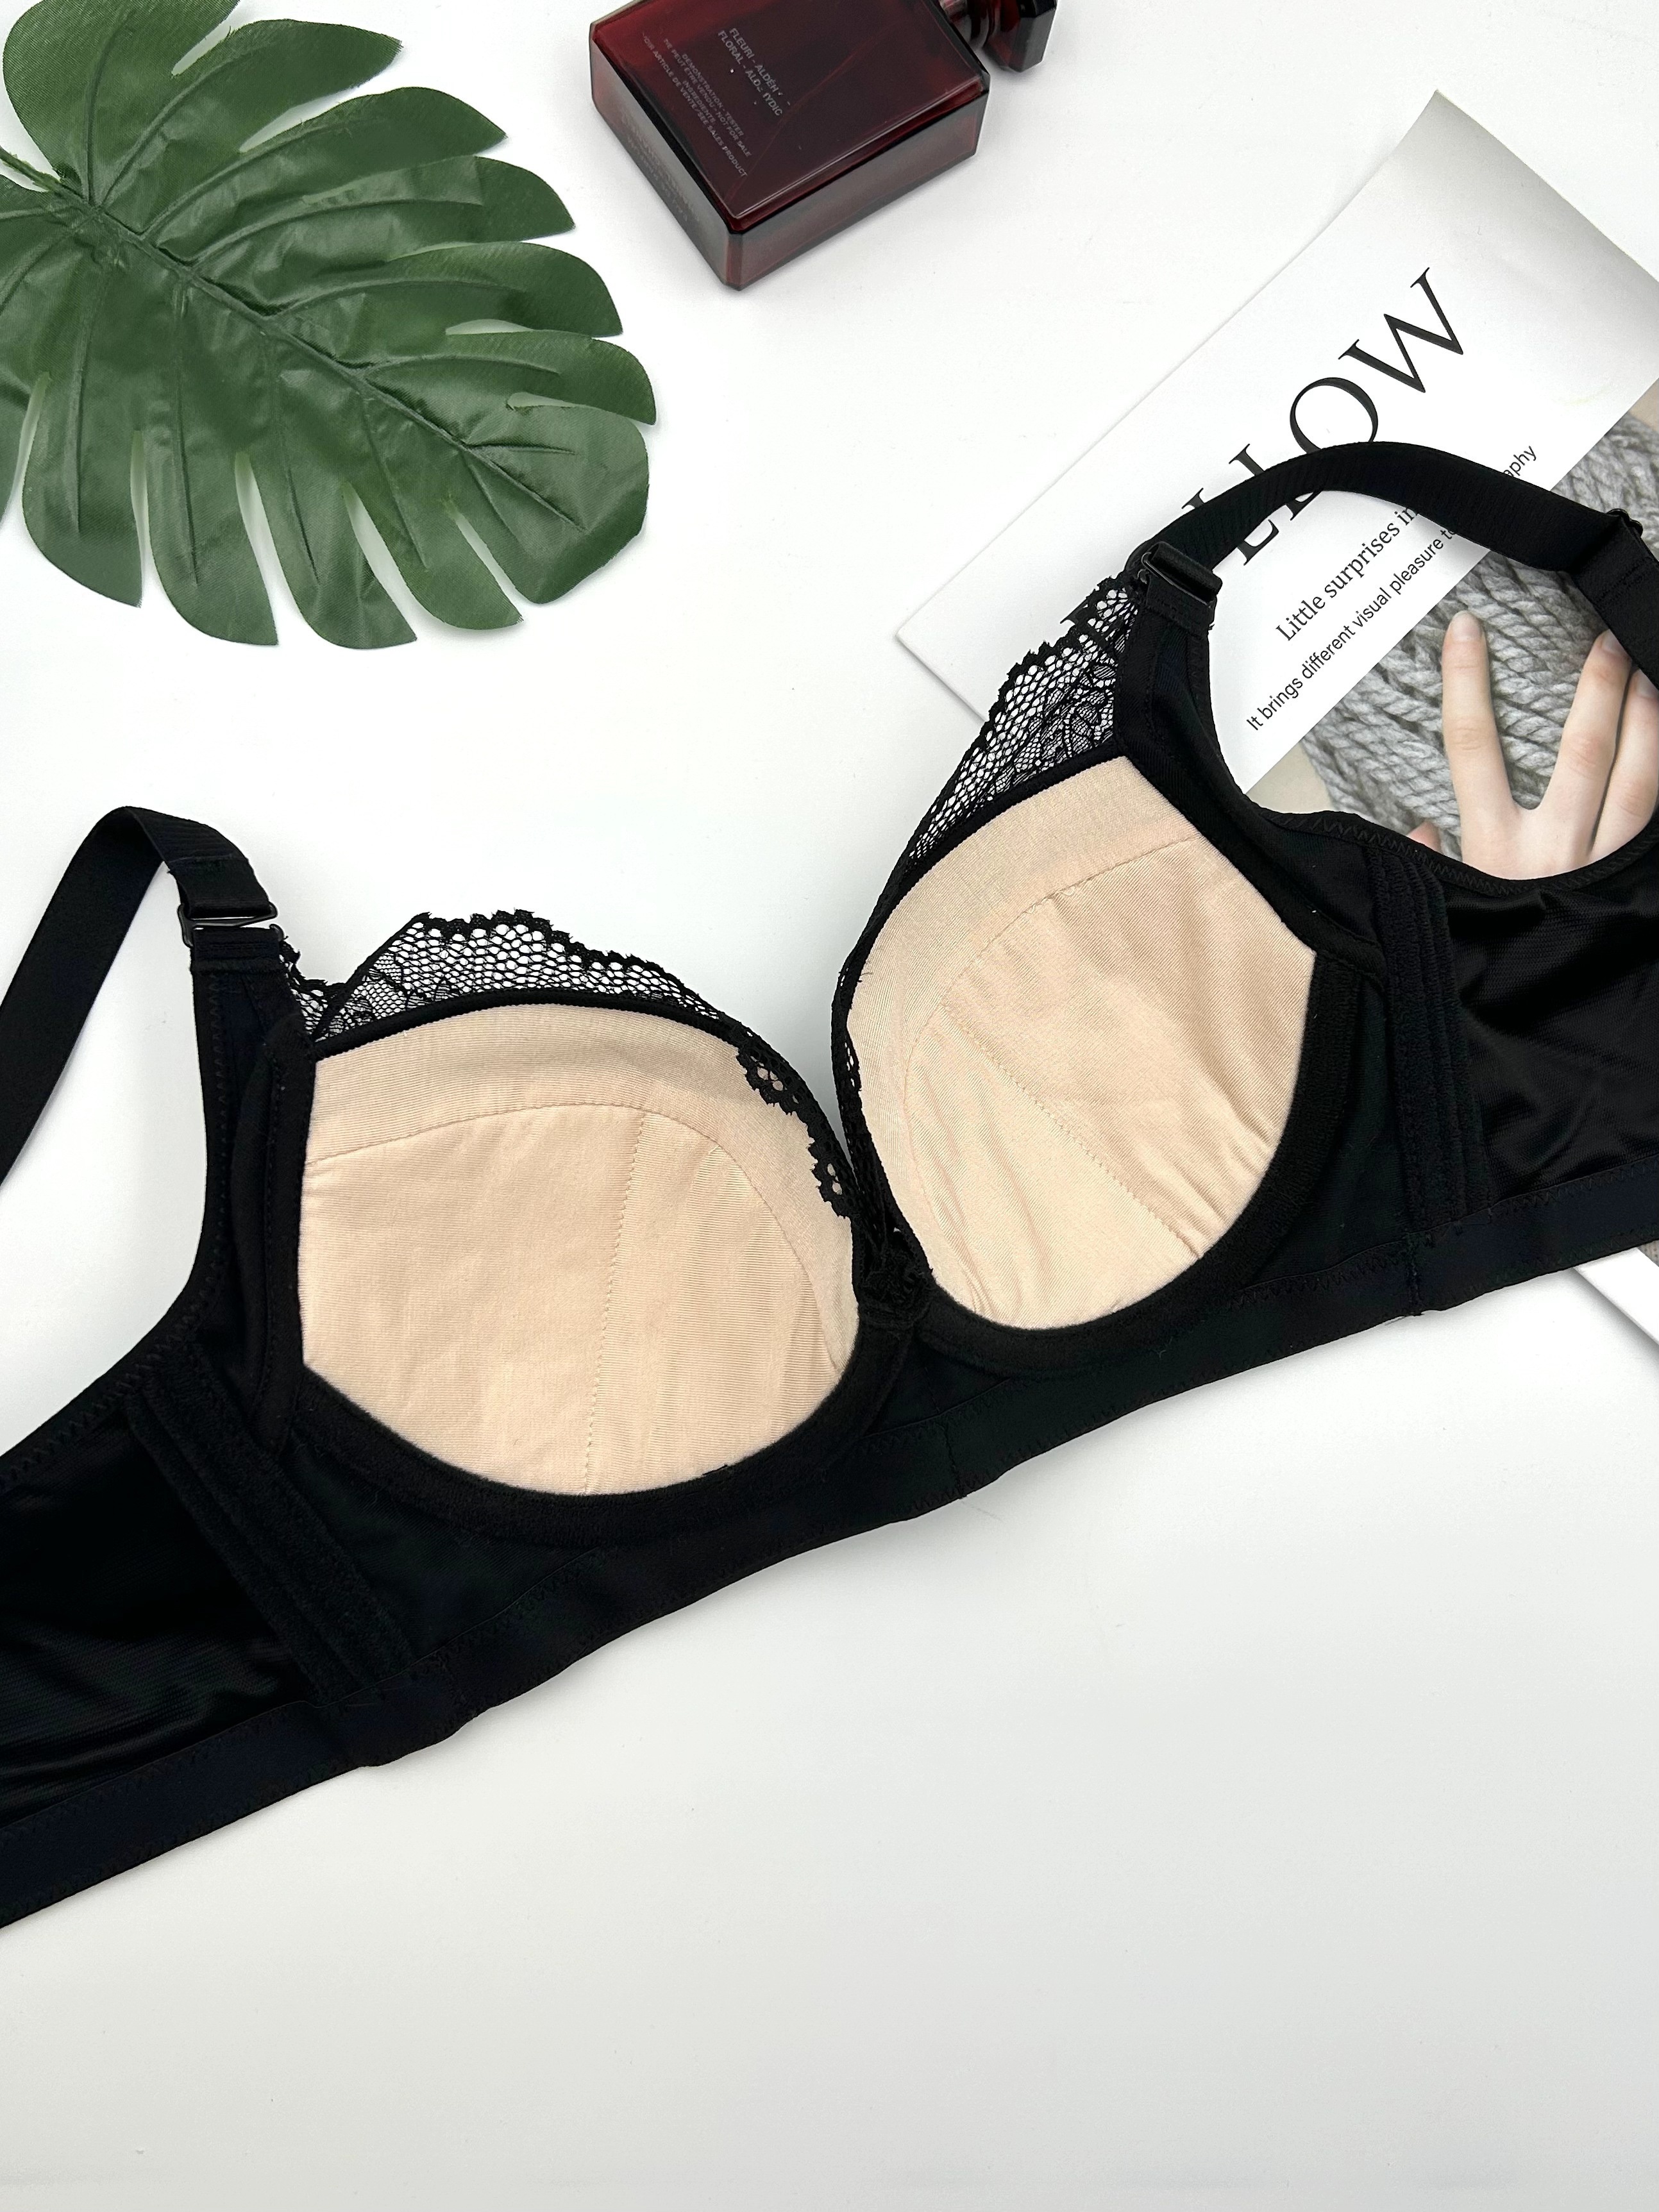 Tawop 36Ddd Bras for Women Woman'S Comfortable Lace Breathable Bra